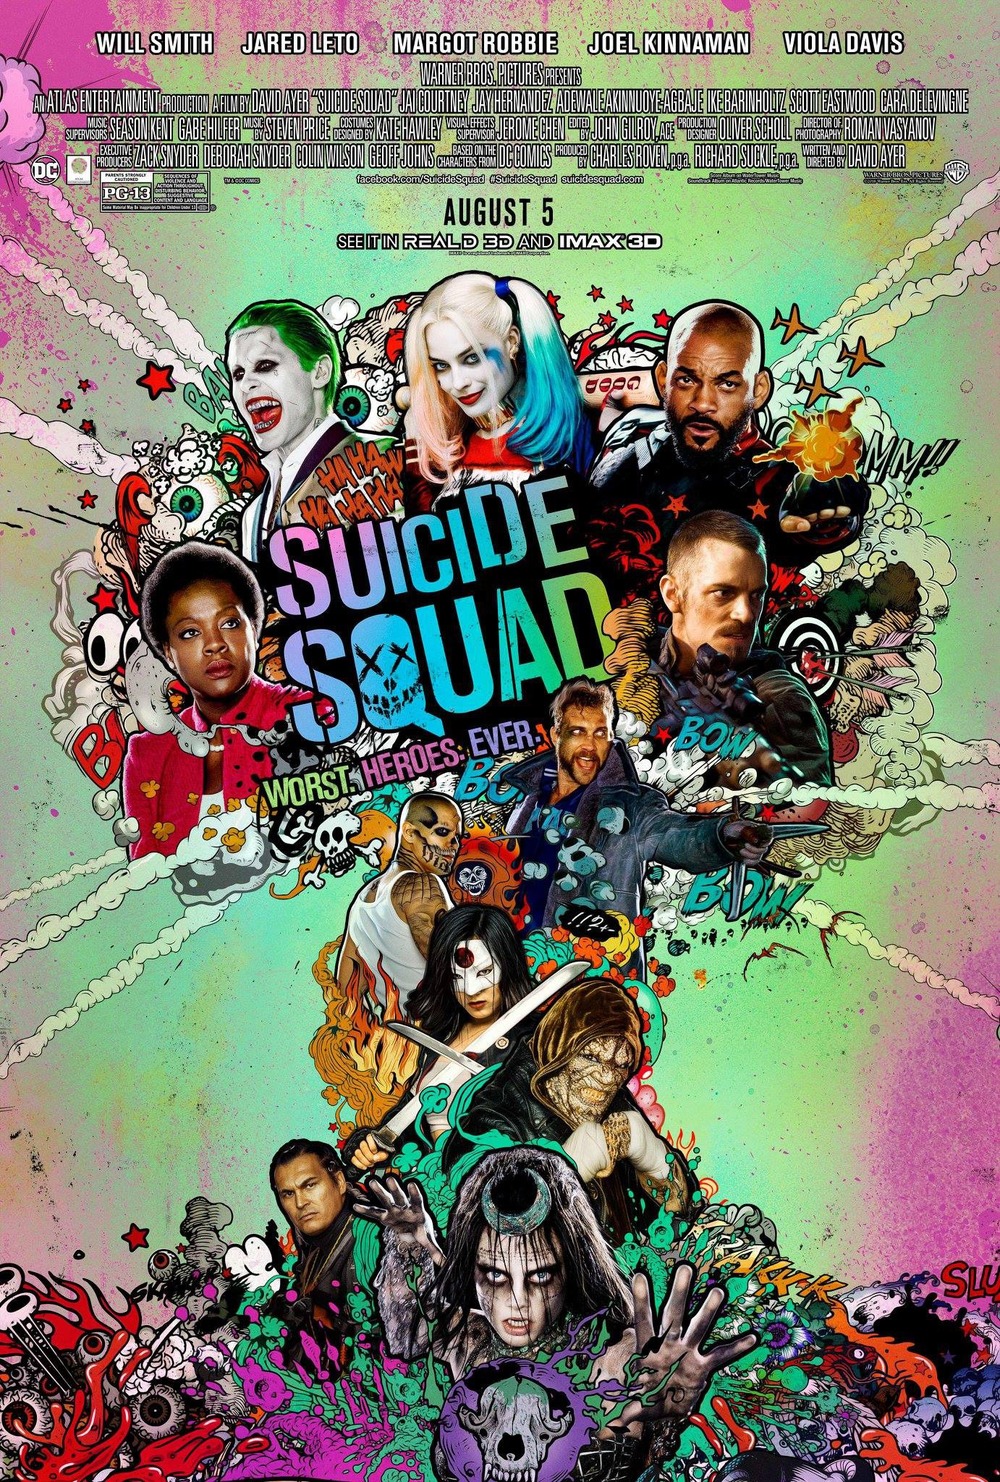 Suicide Squad Dvd Release Date